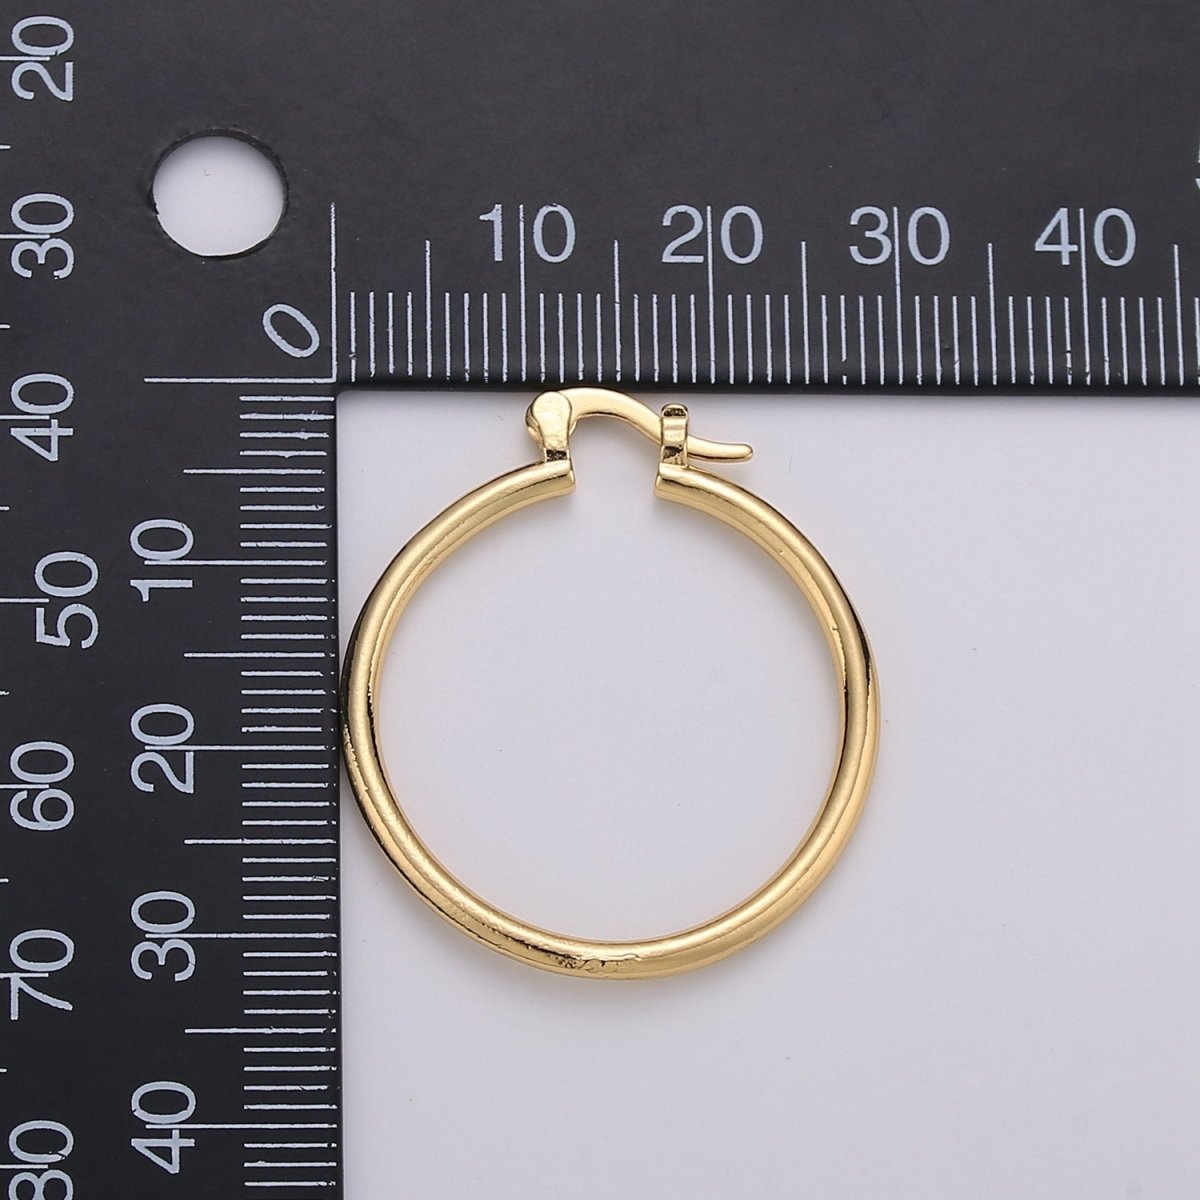 Tube Hoops Gold, 30mm Gold Hoops, Large Gold Hoop Earrings, Hollow Hoop Earrings, Chunky Hoops, Light Hoops for Every Day Wear Q-229 - DLUXCA